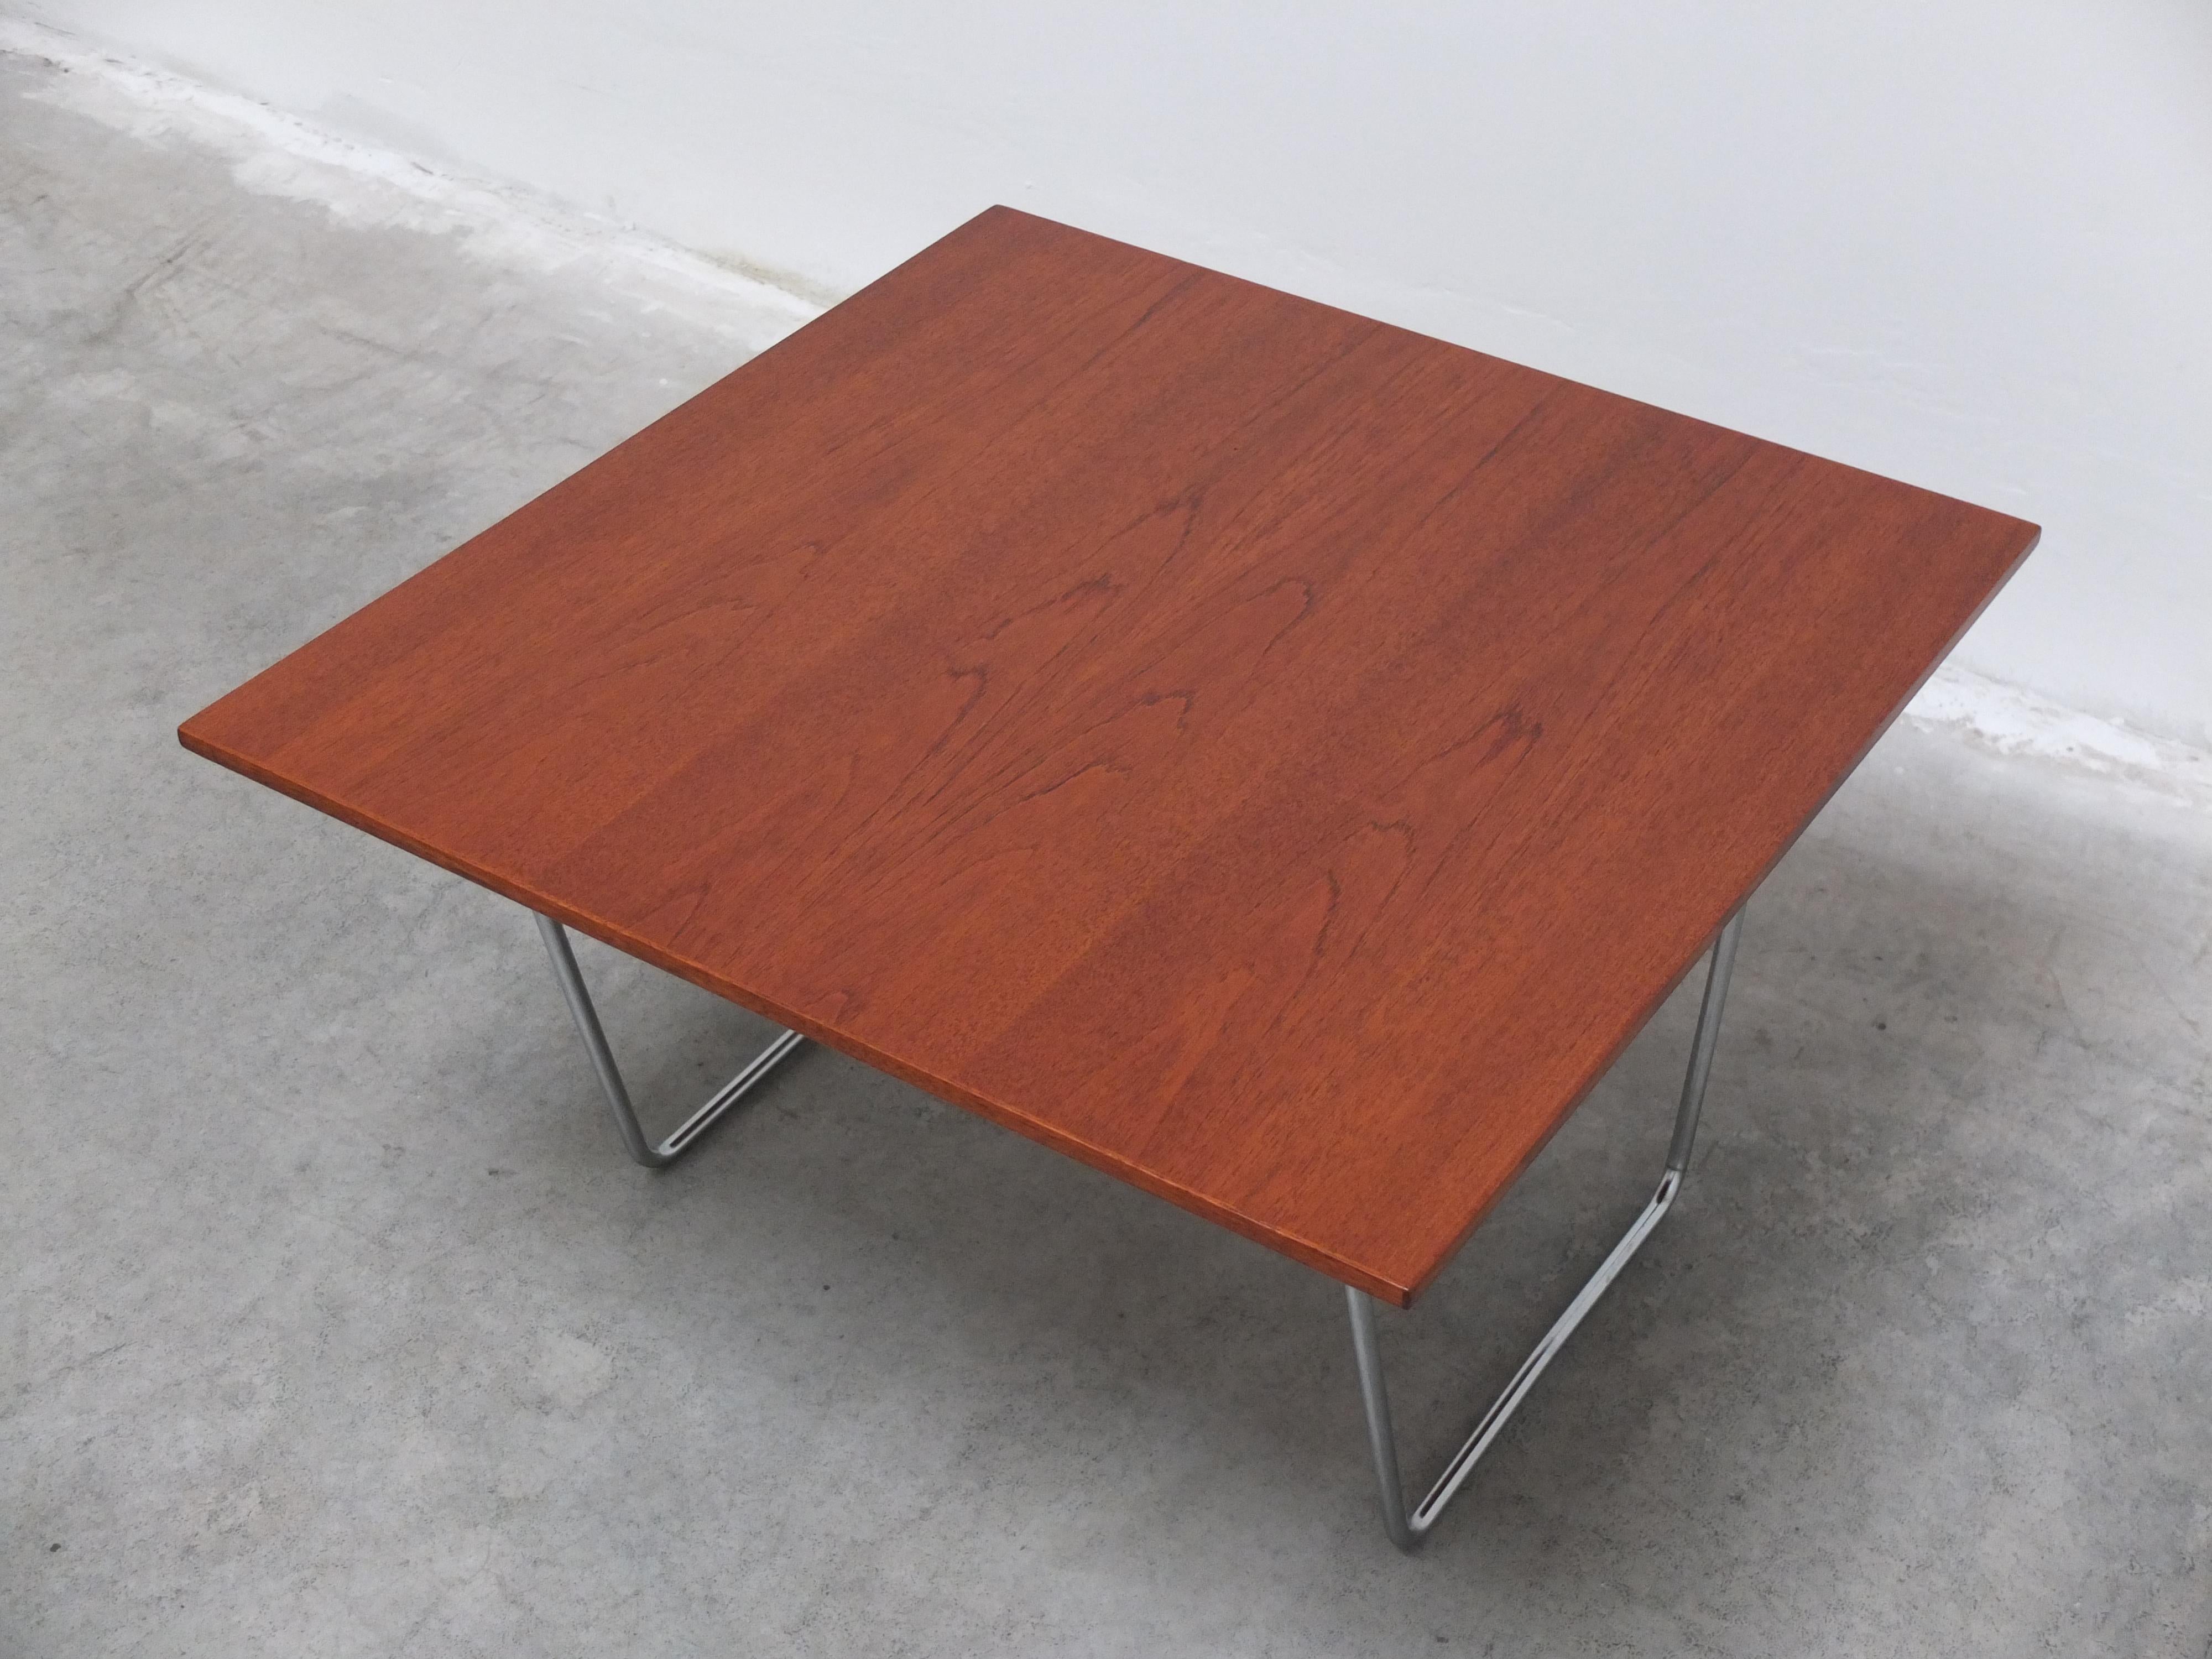 Metal Rare 'Bachelor' Coffee Table in Teak by Verner Panton for Fritz Hansen, 1971